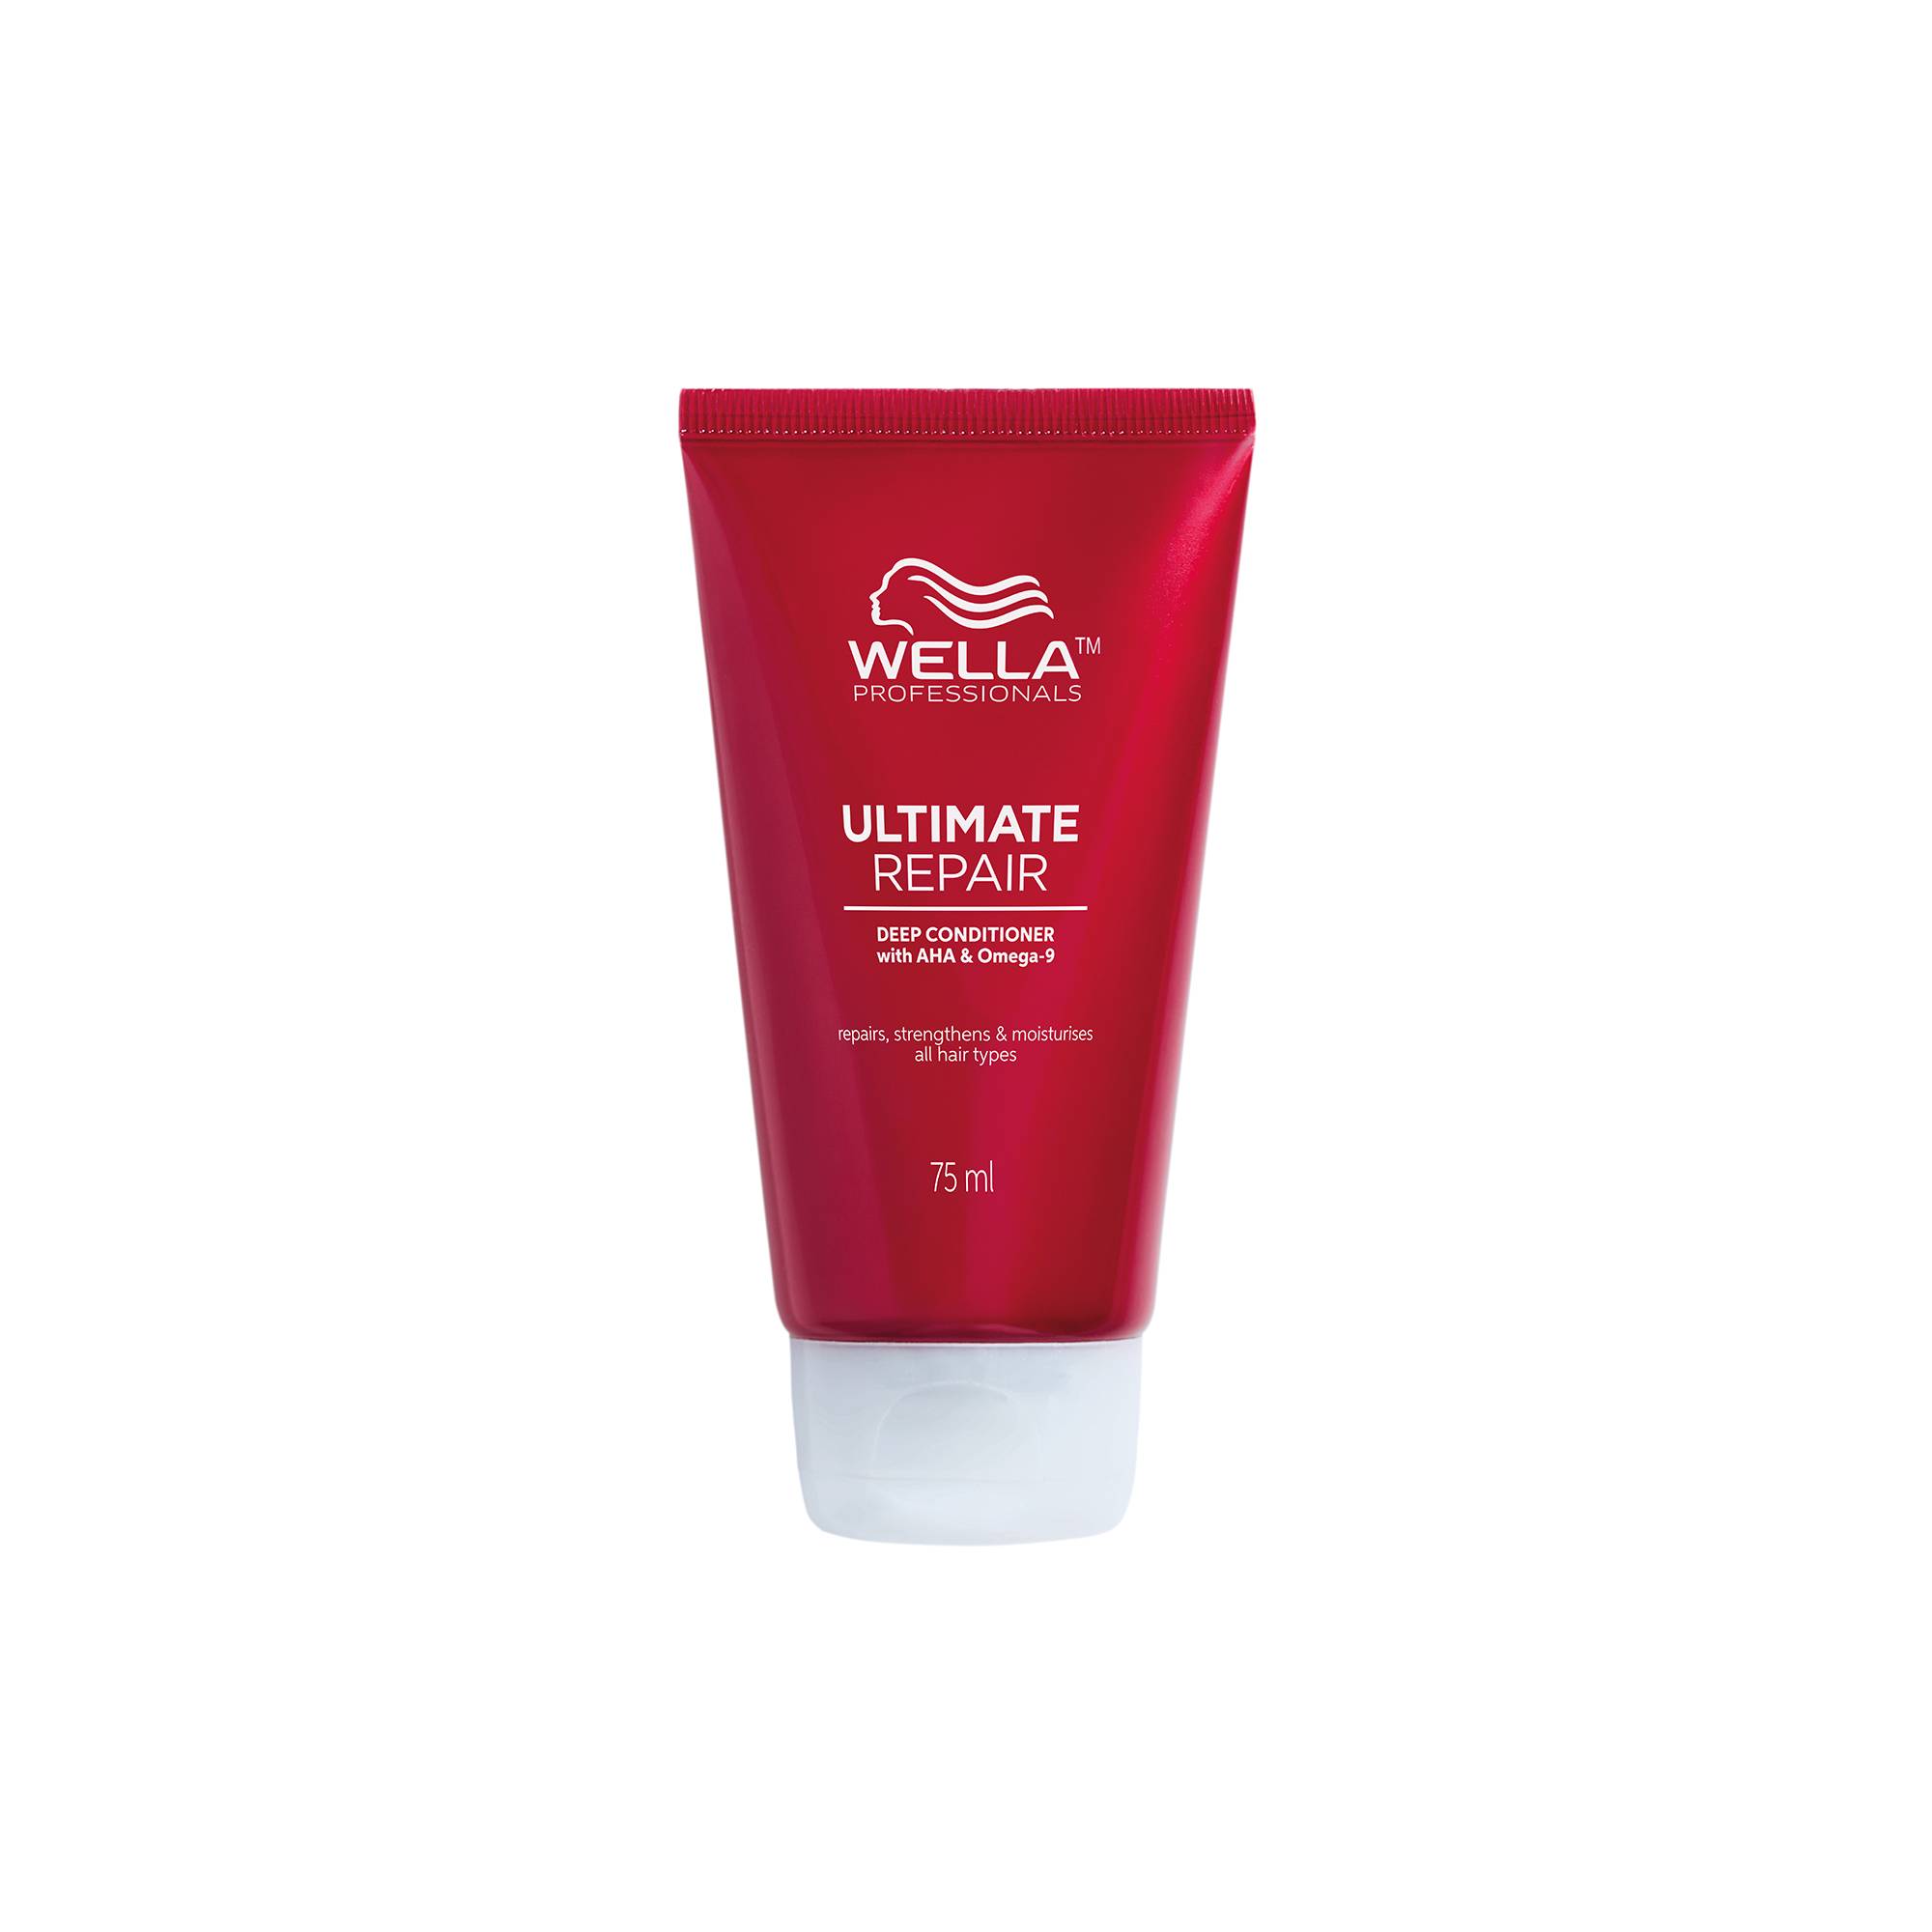 Après-shampoing intense Ultimate Repair de la marque Wella Professionals Contenance 75ml - 1